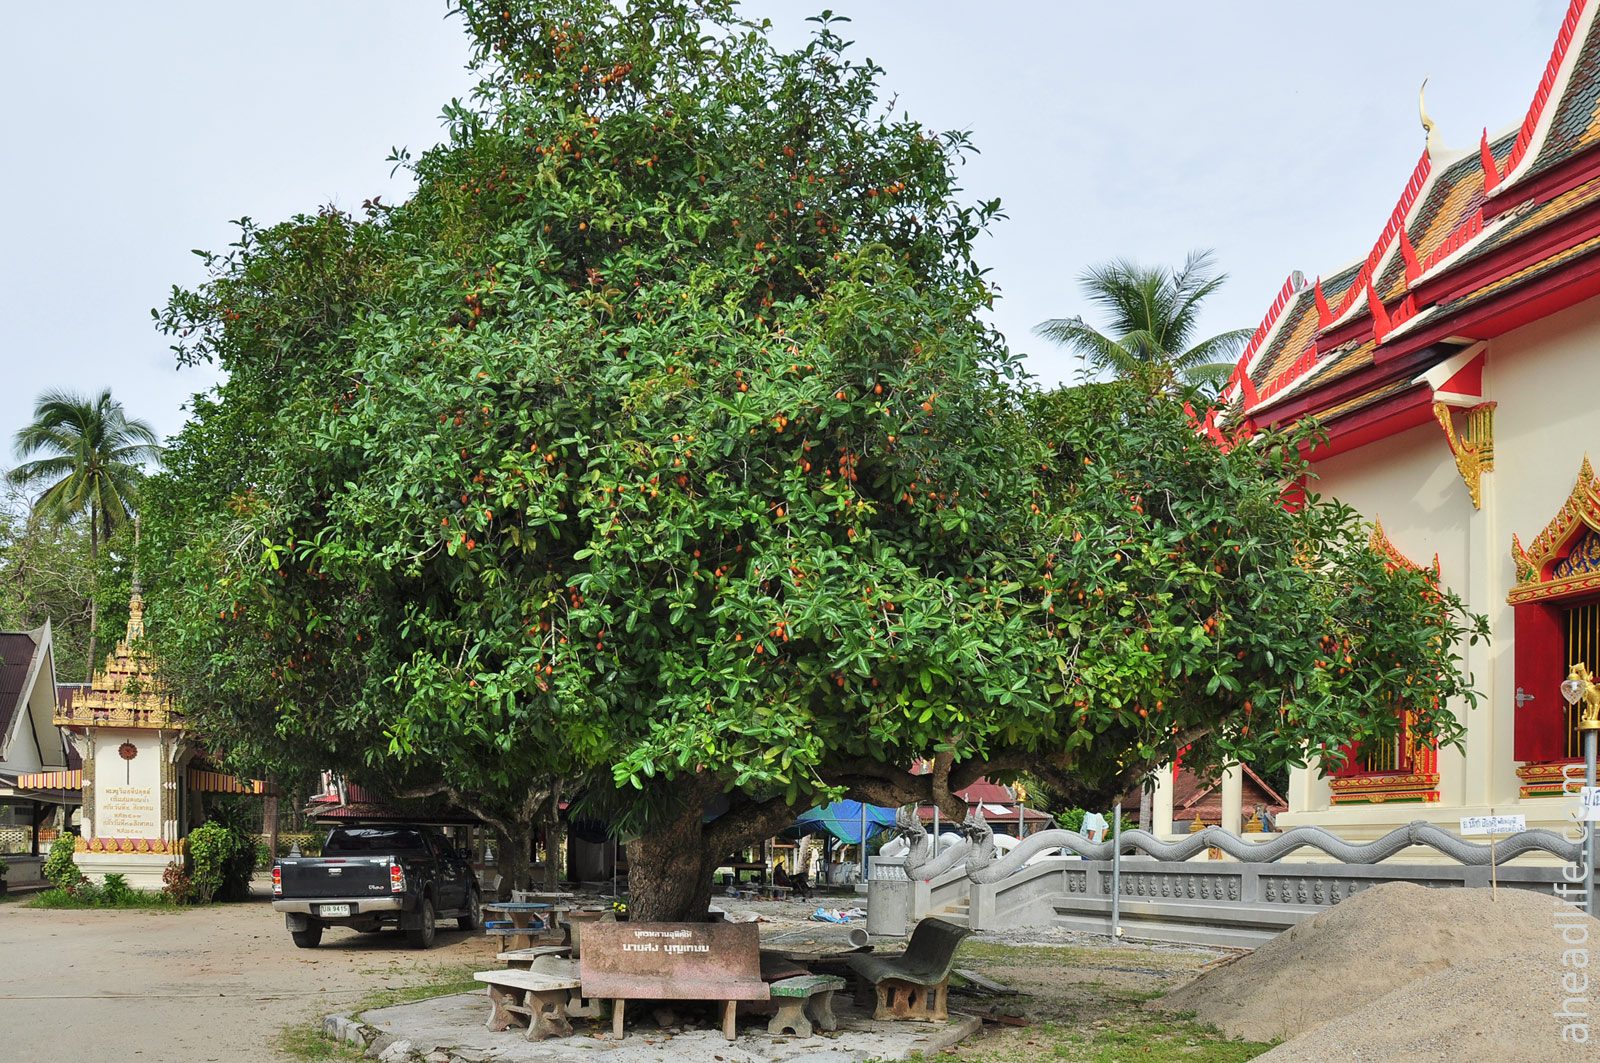 Wat Kiri Wongkaram